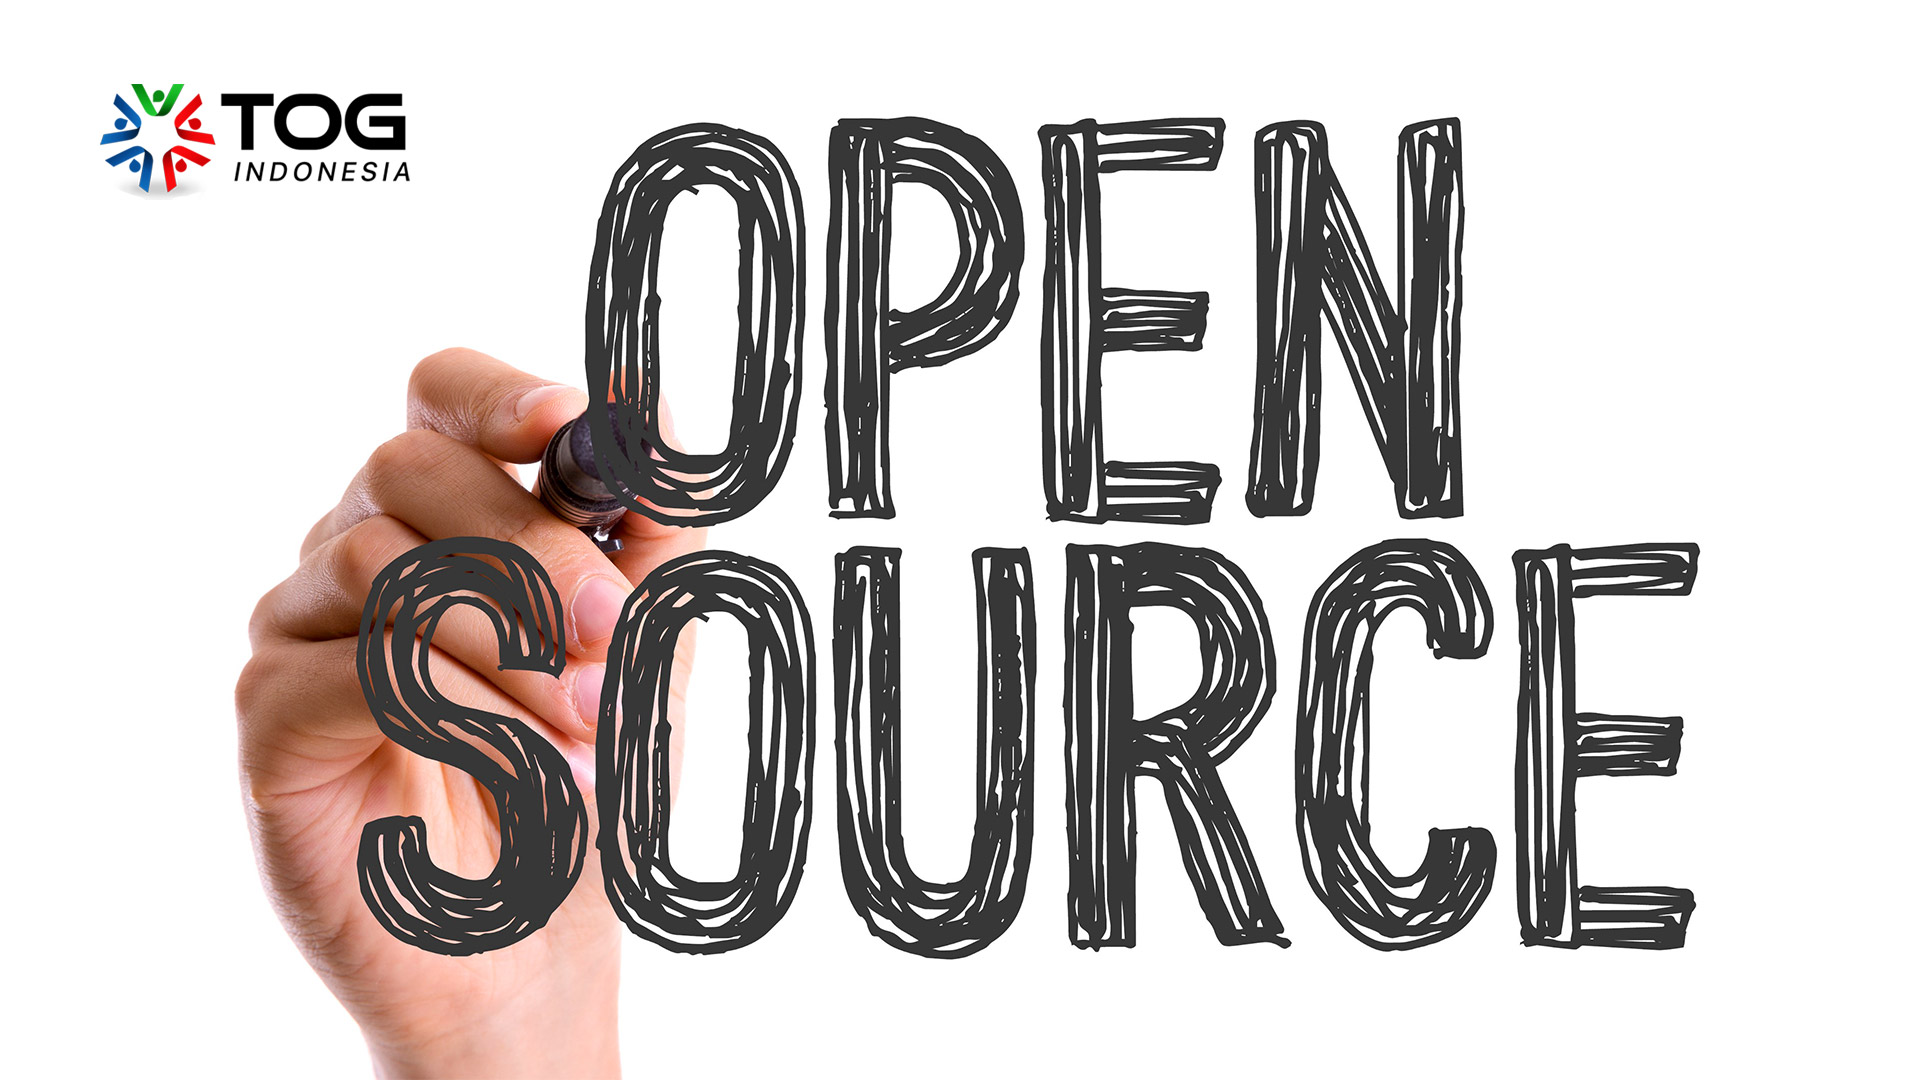 Kelebihan Open Source